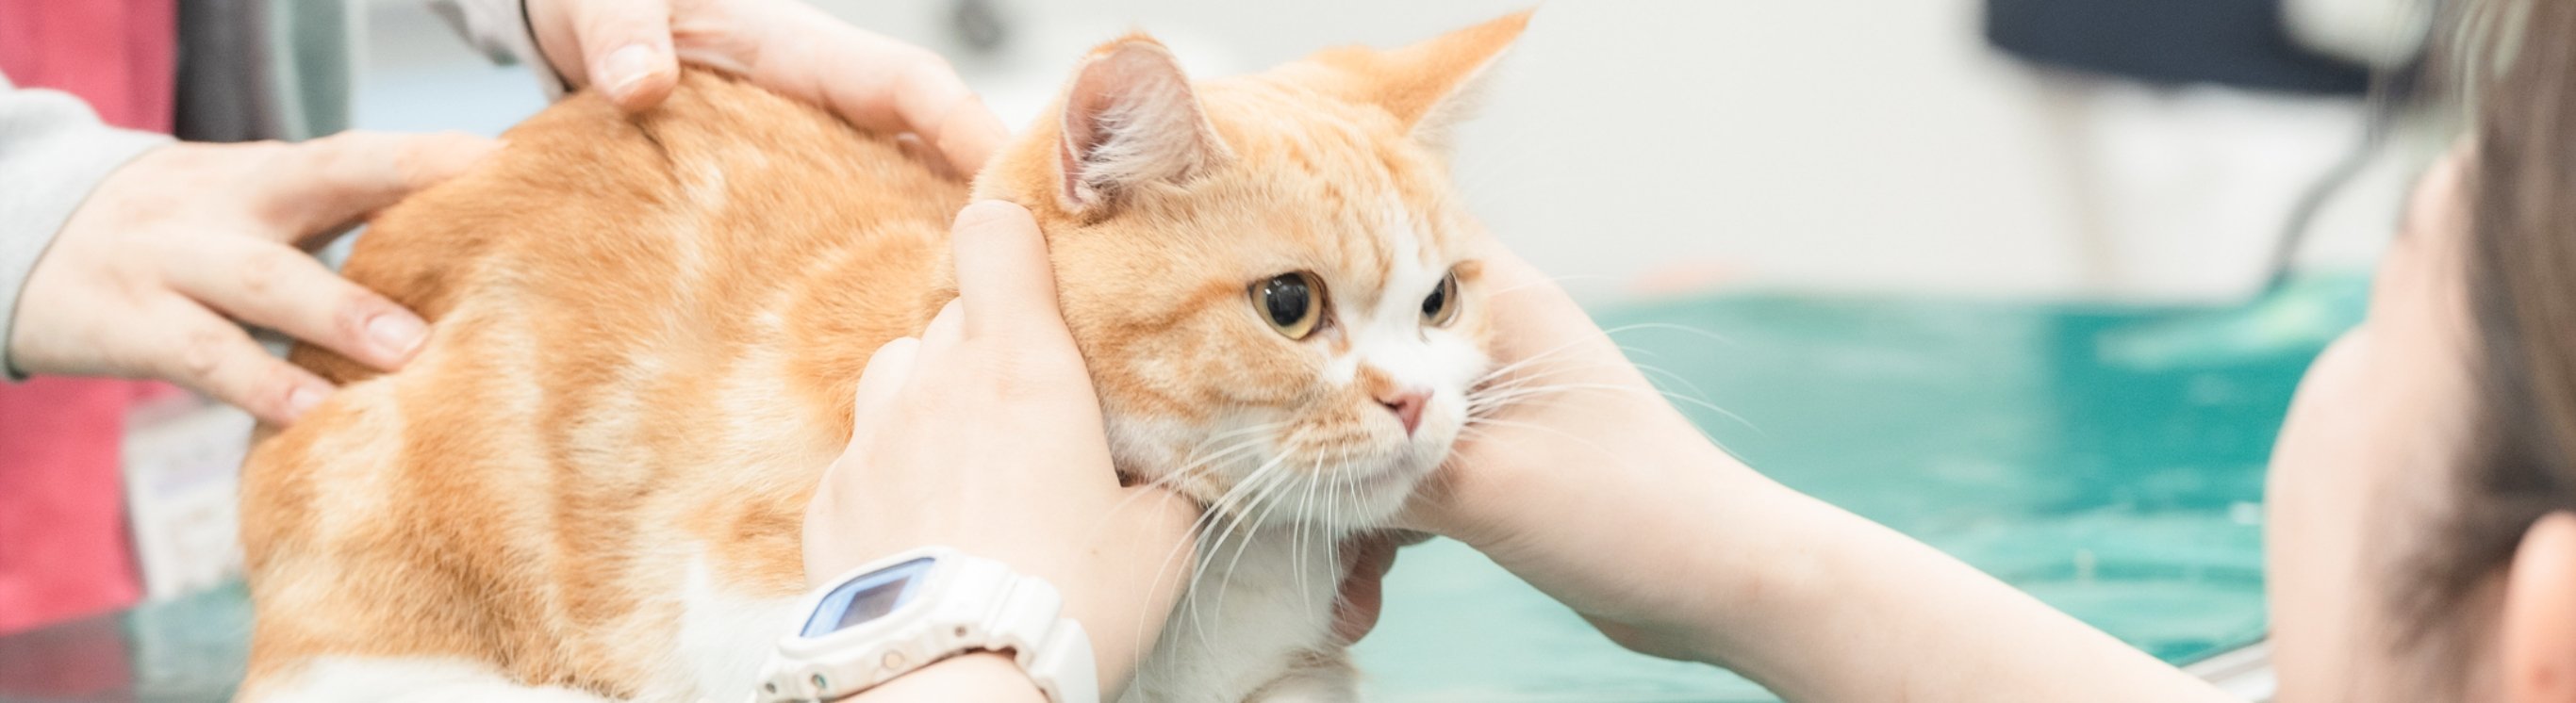 CAT PREVENTIVE VACCINATION ねこさんの予防（ワクチン）接種とノミ・ダニ、フィラリア予防